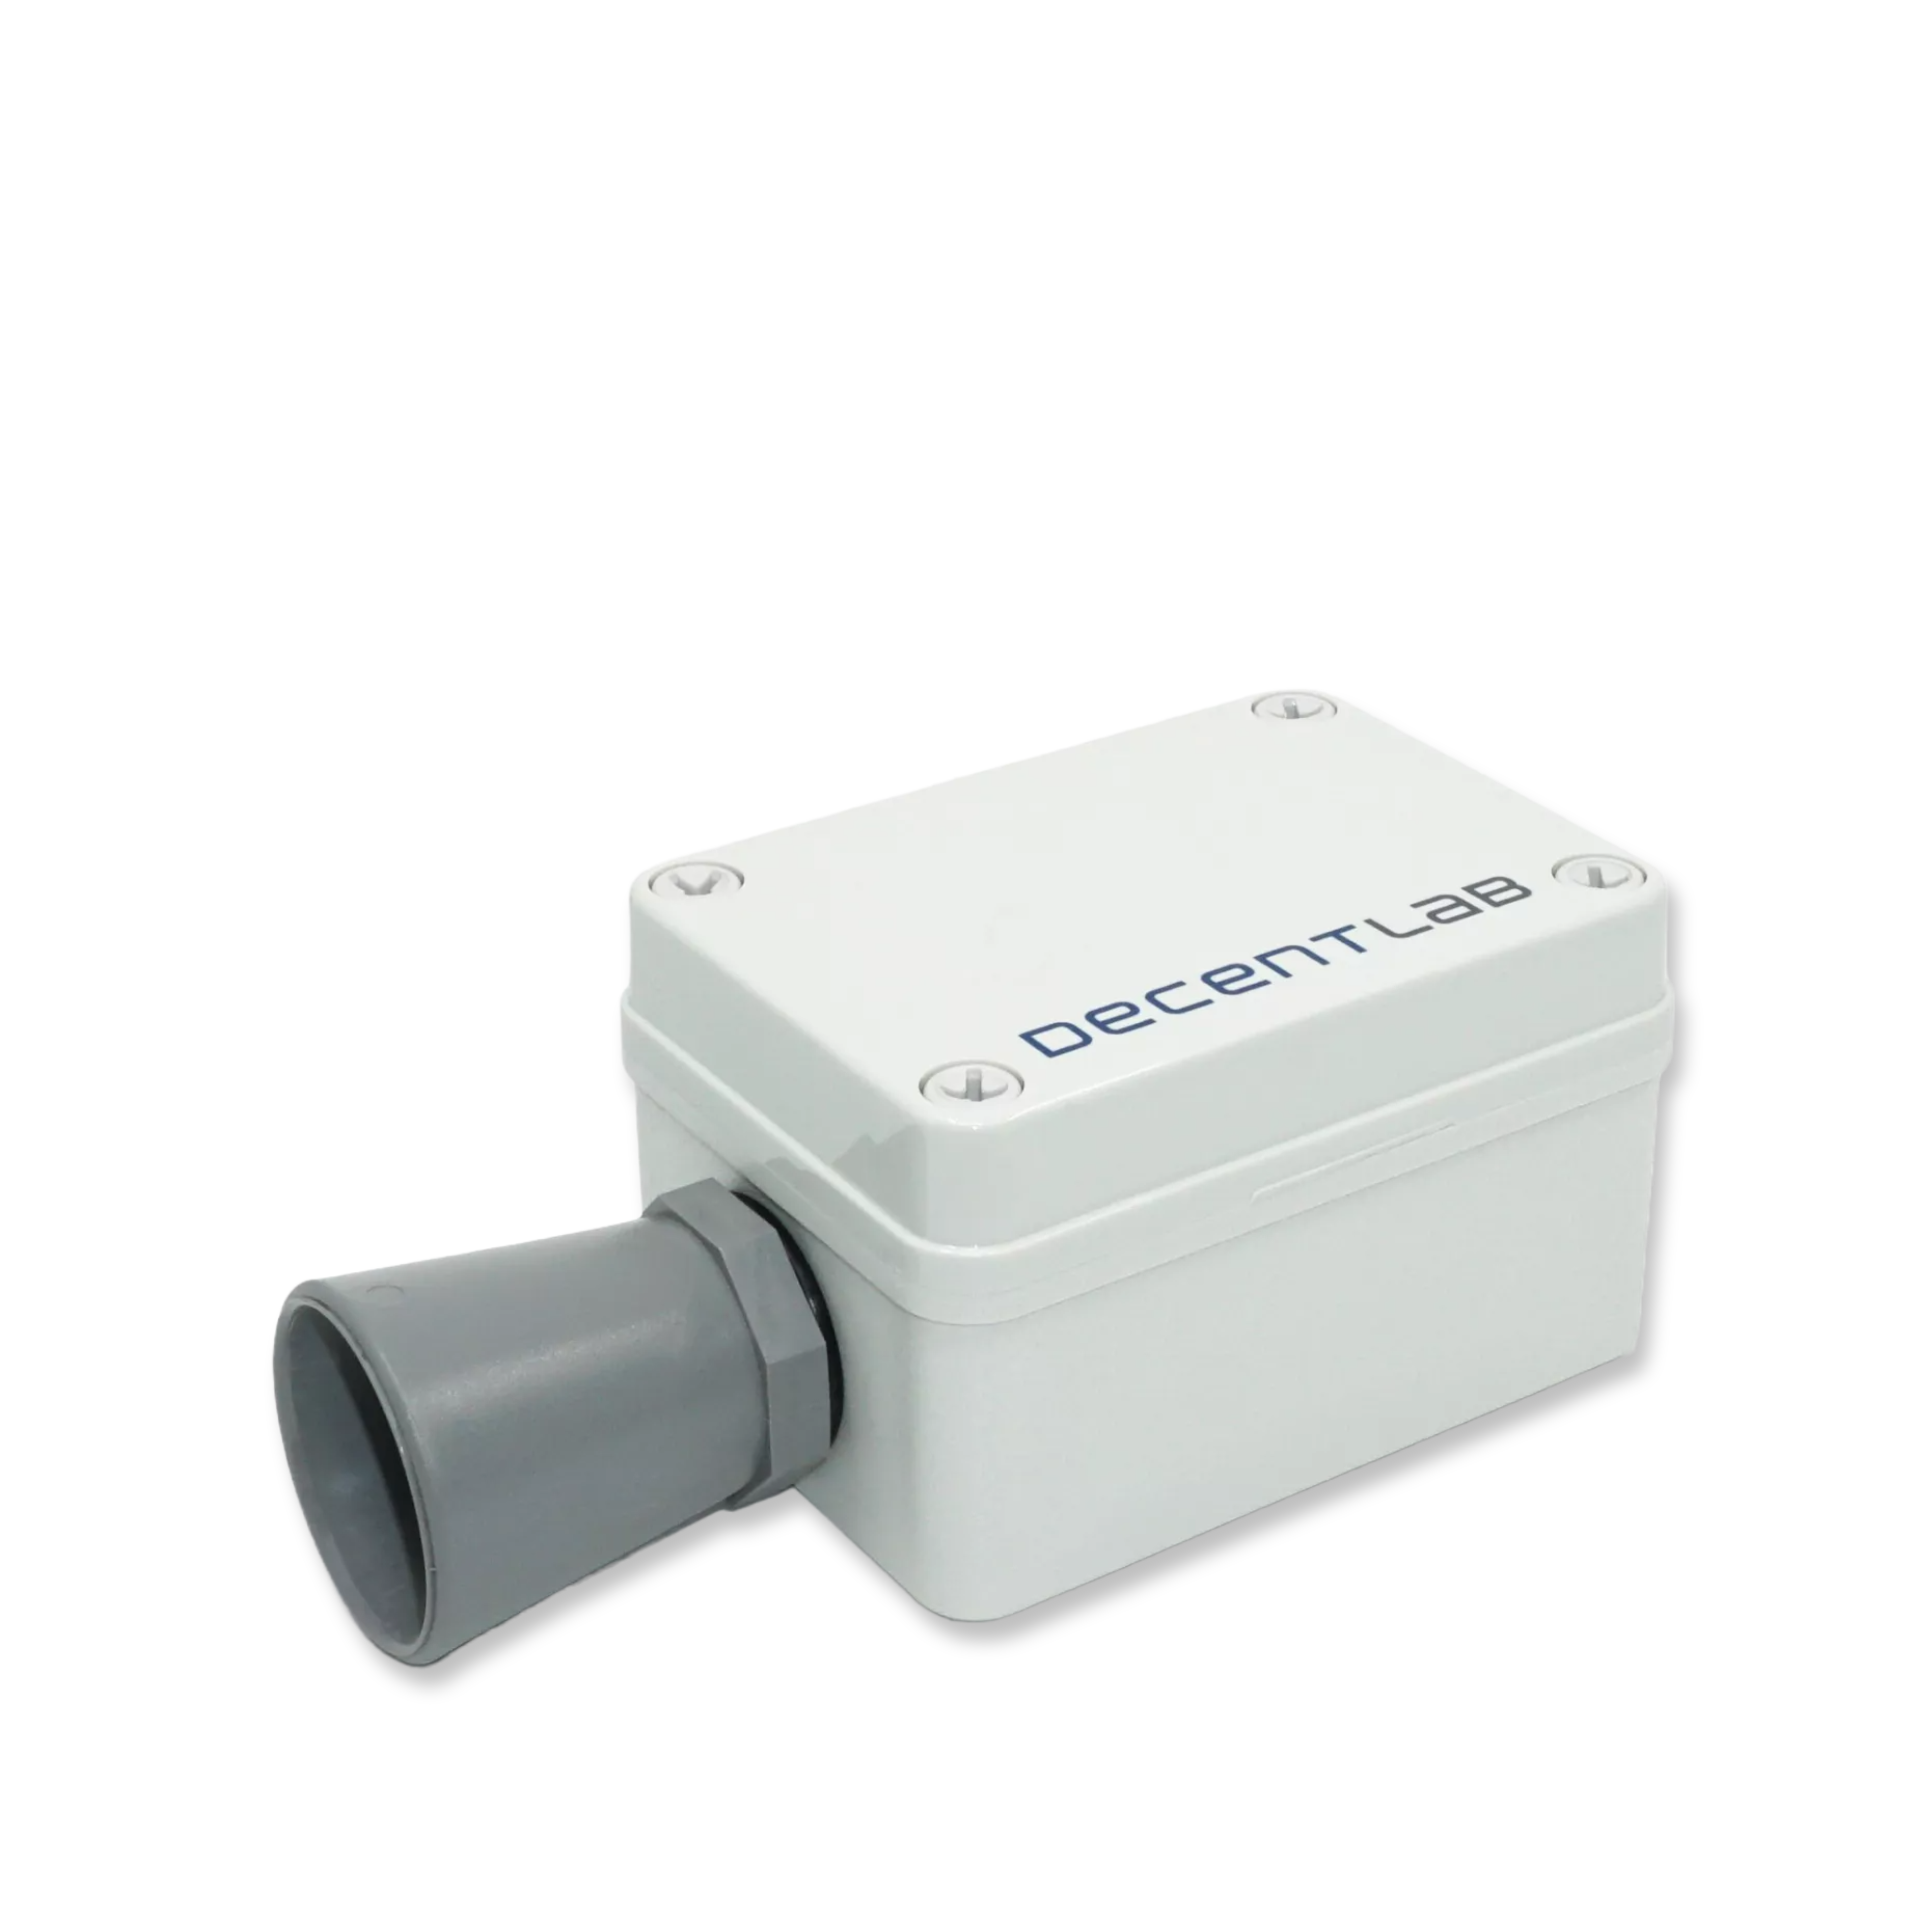 Decentlab Ultrasonic Sensor for Distance & Level DL-MBX-001 LoRaWAN®